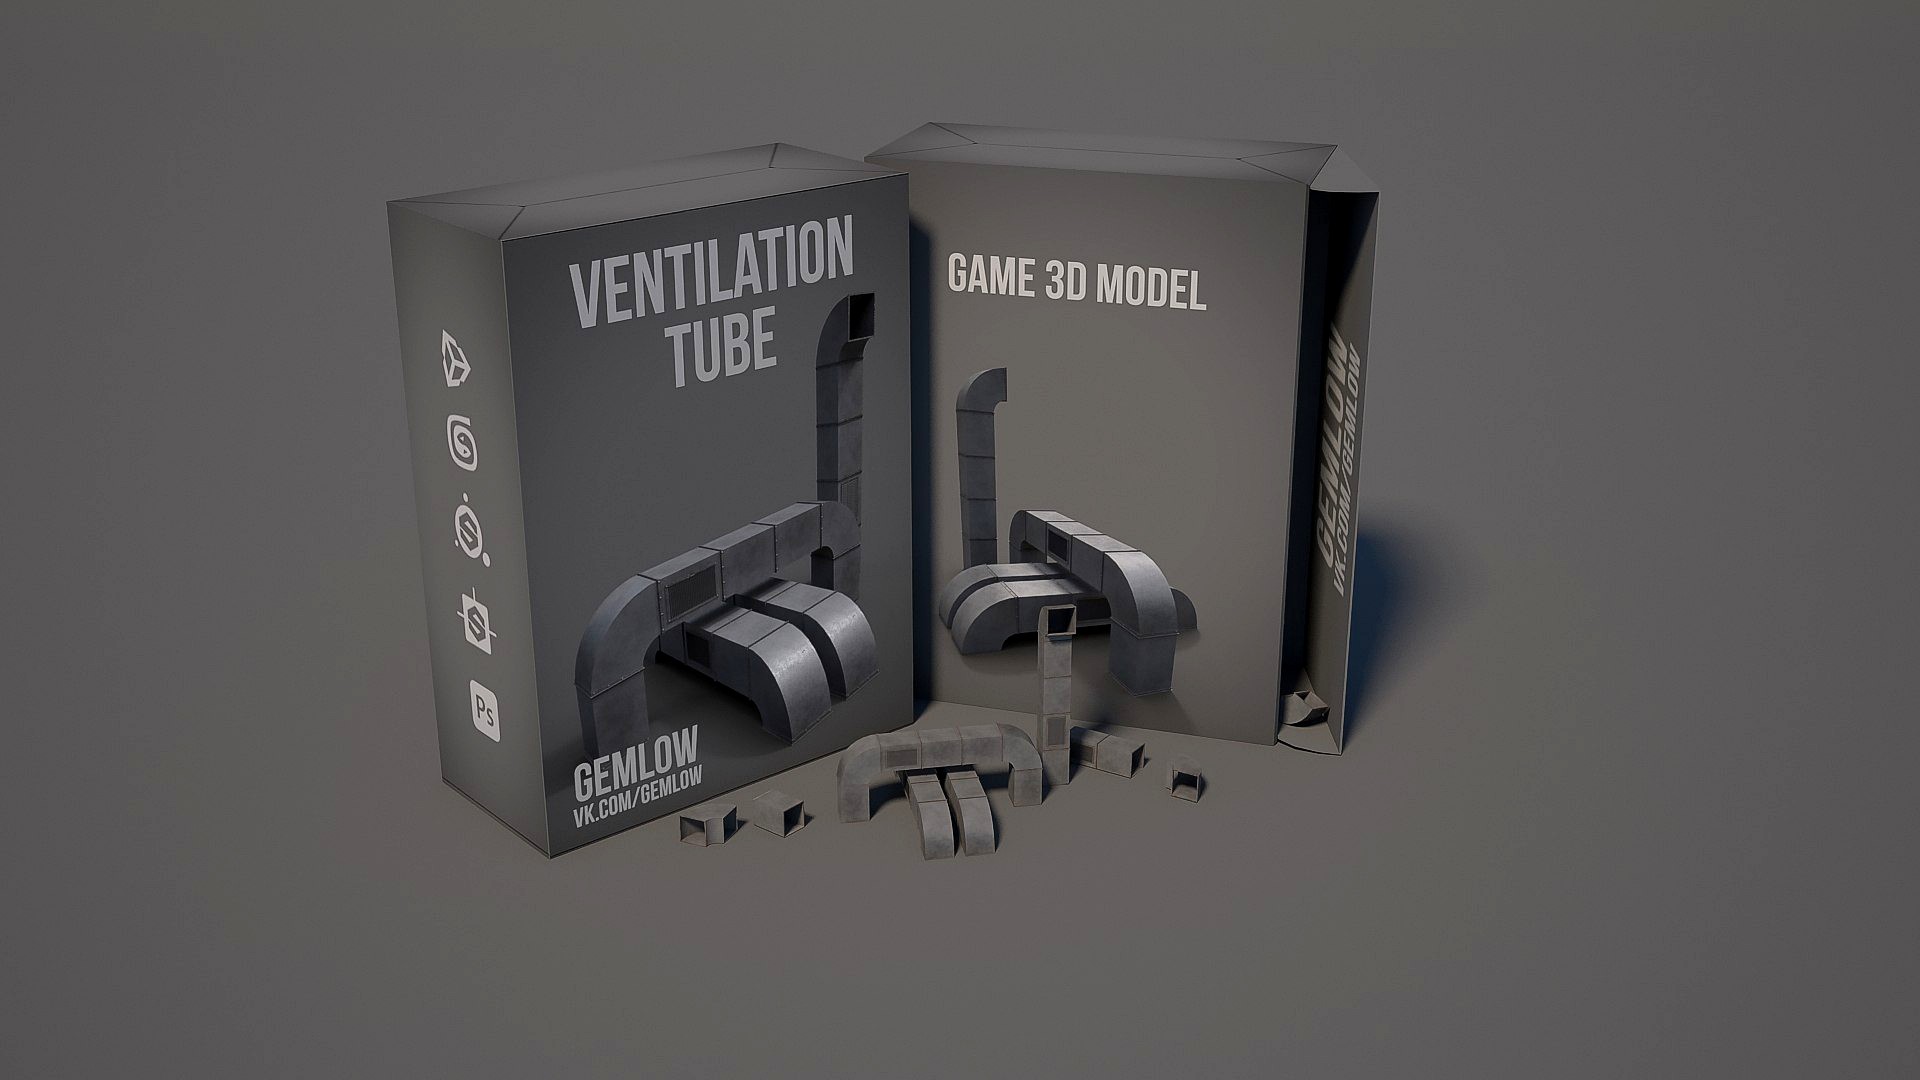 Ventilation tube